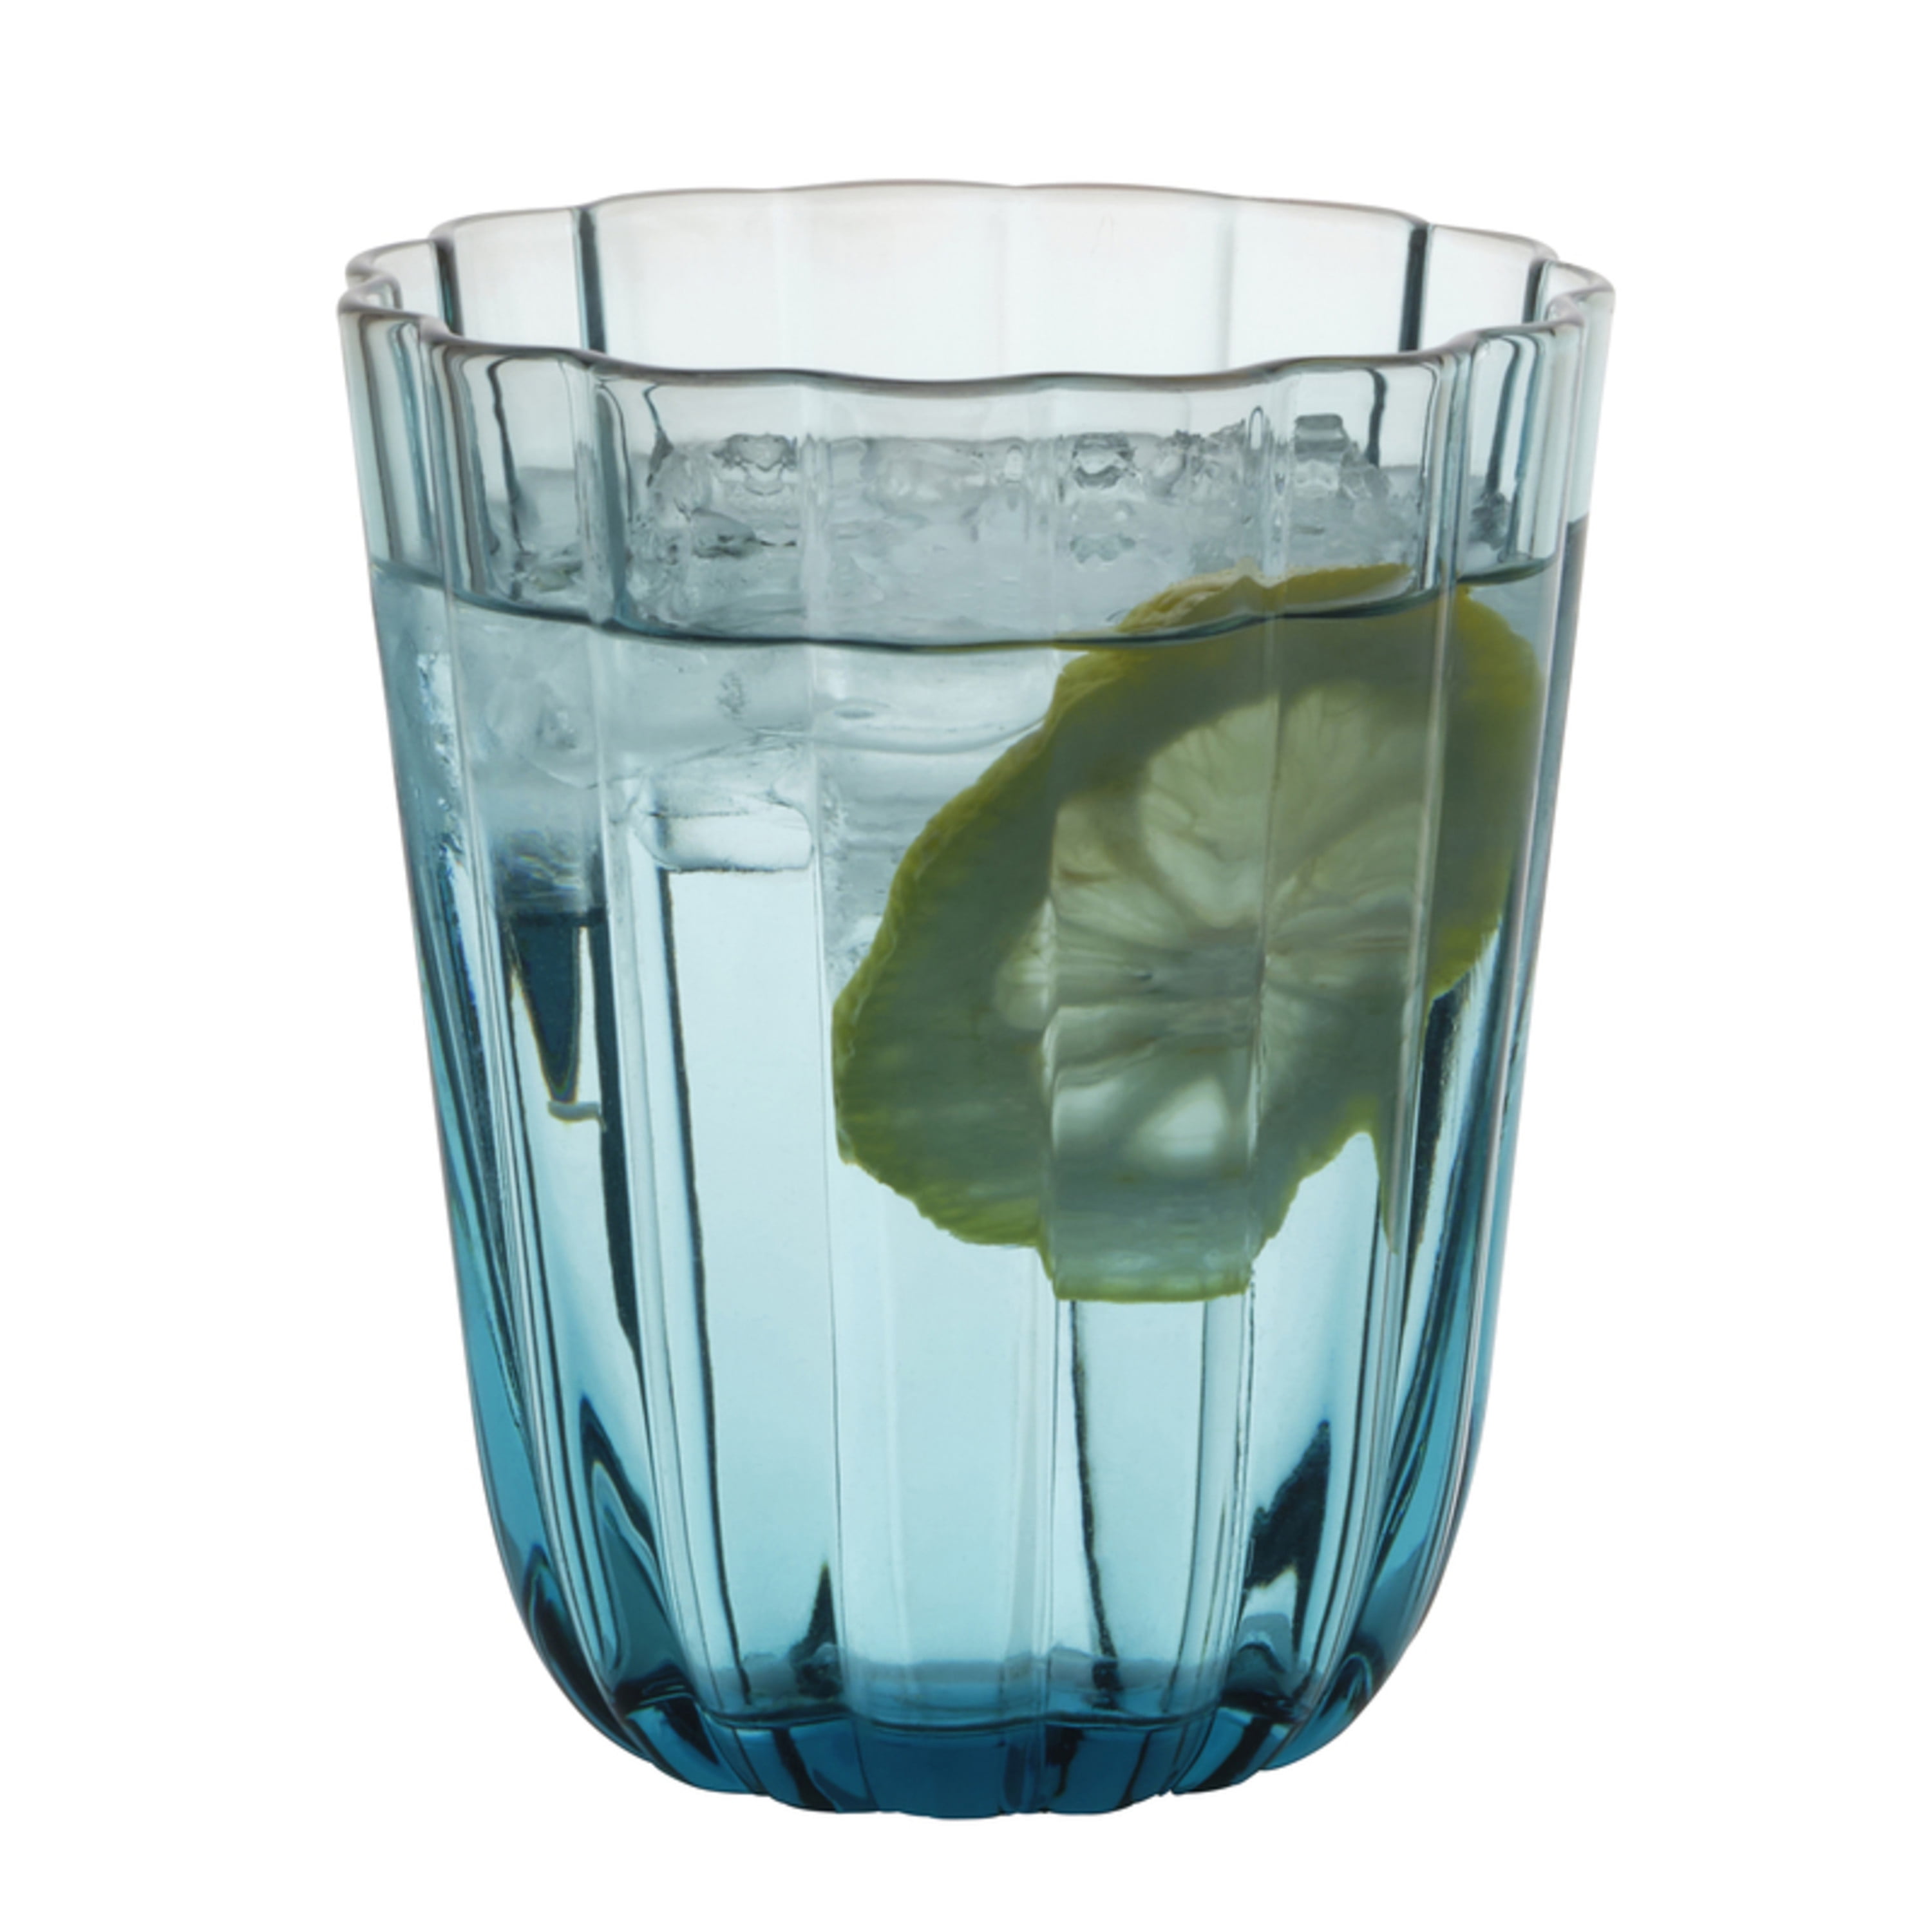 Grecian Blue Ombre Glass Drinkware Set, 8 Piece by Drew Barrymore